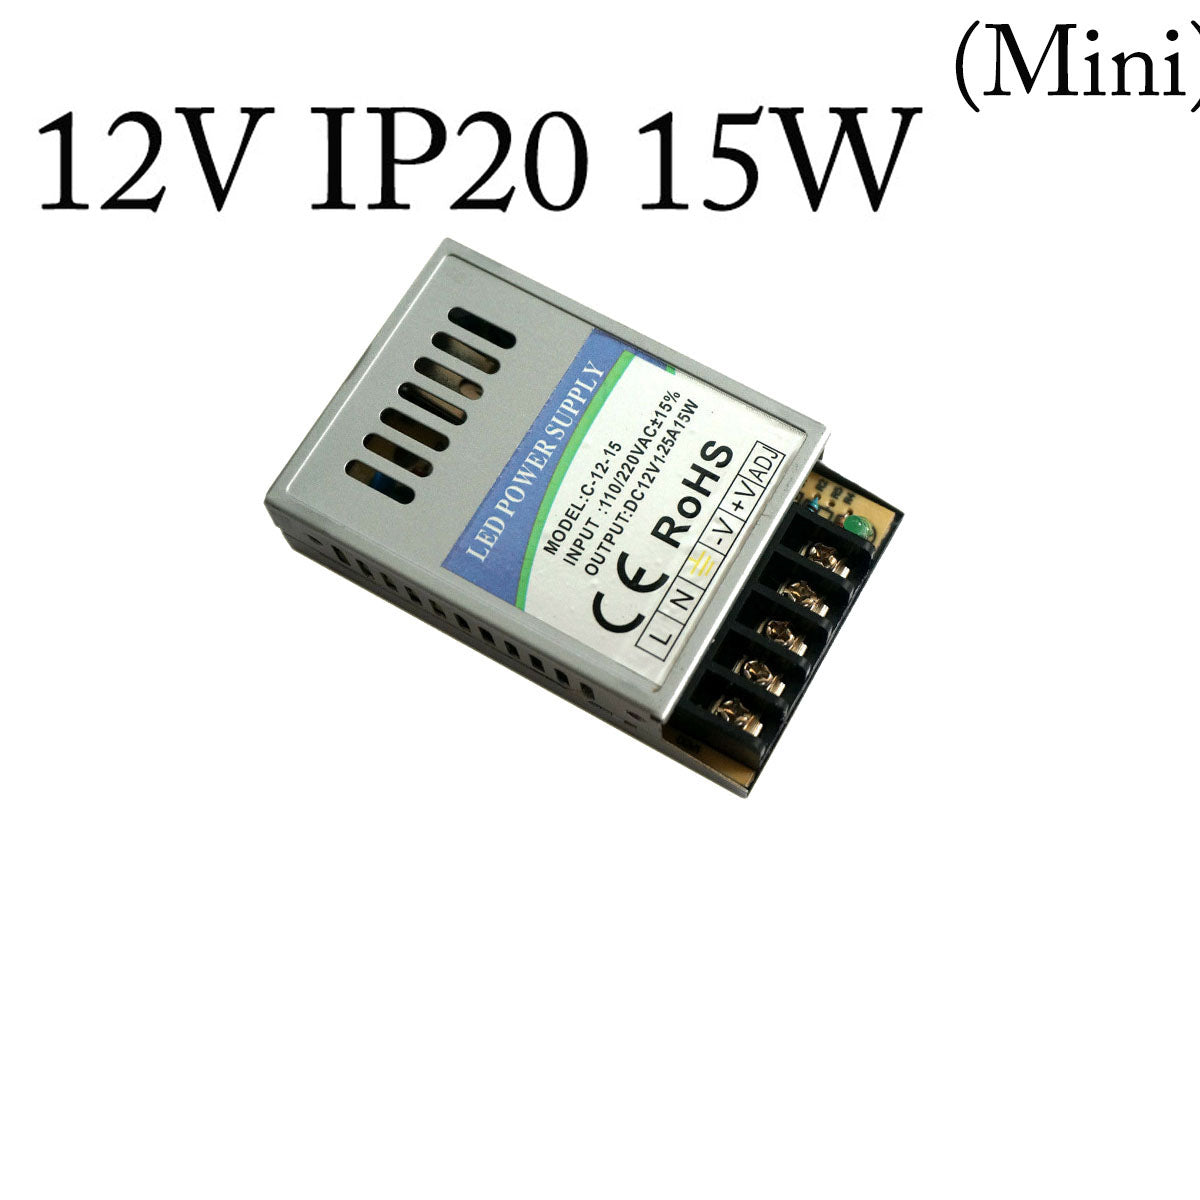 DC12V Transformator 15W-240W IP20 Mini Universal geregelter LED Transformator